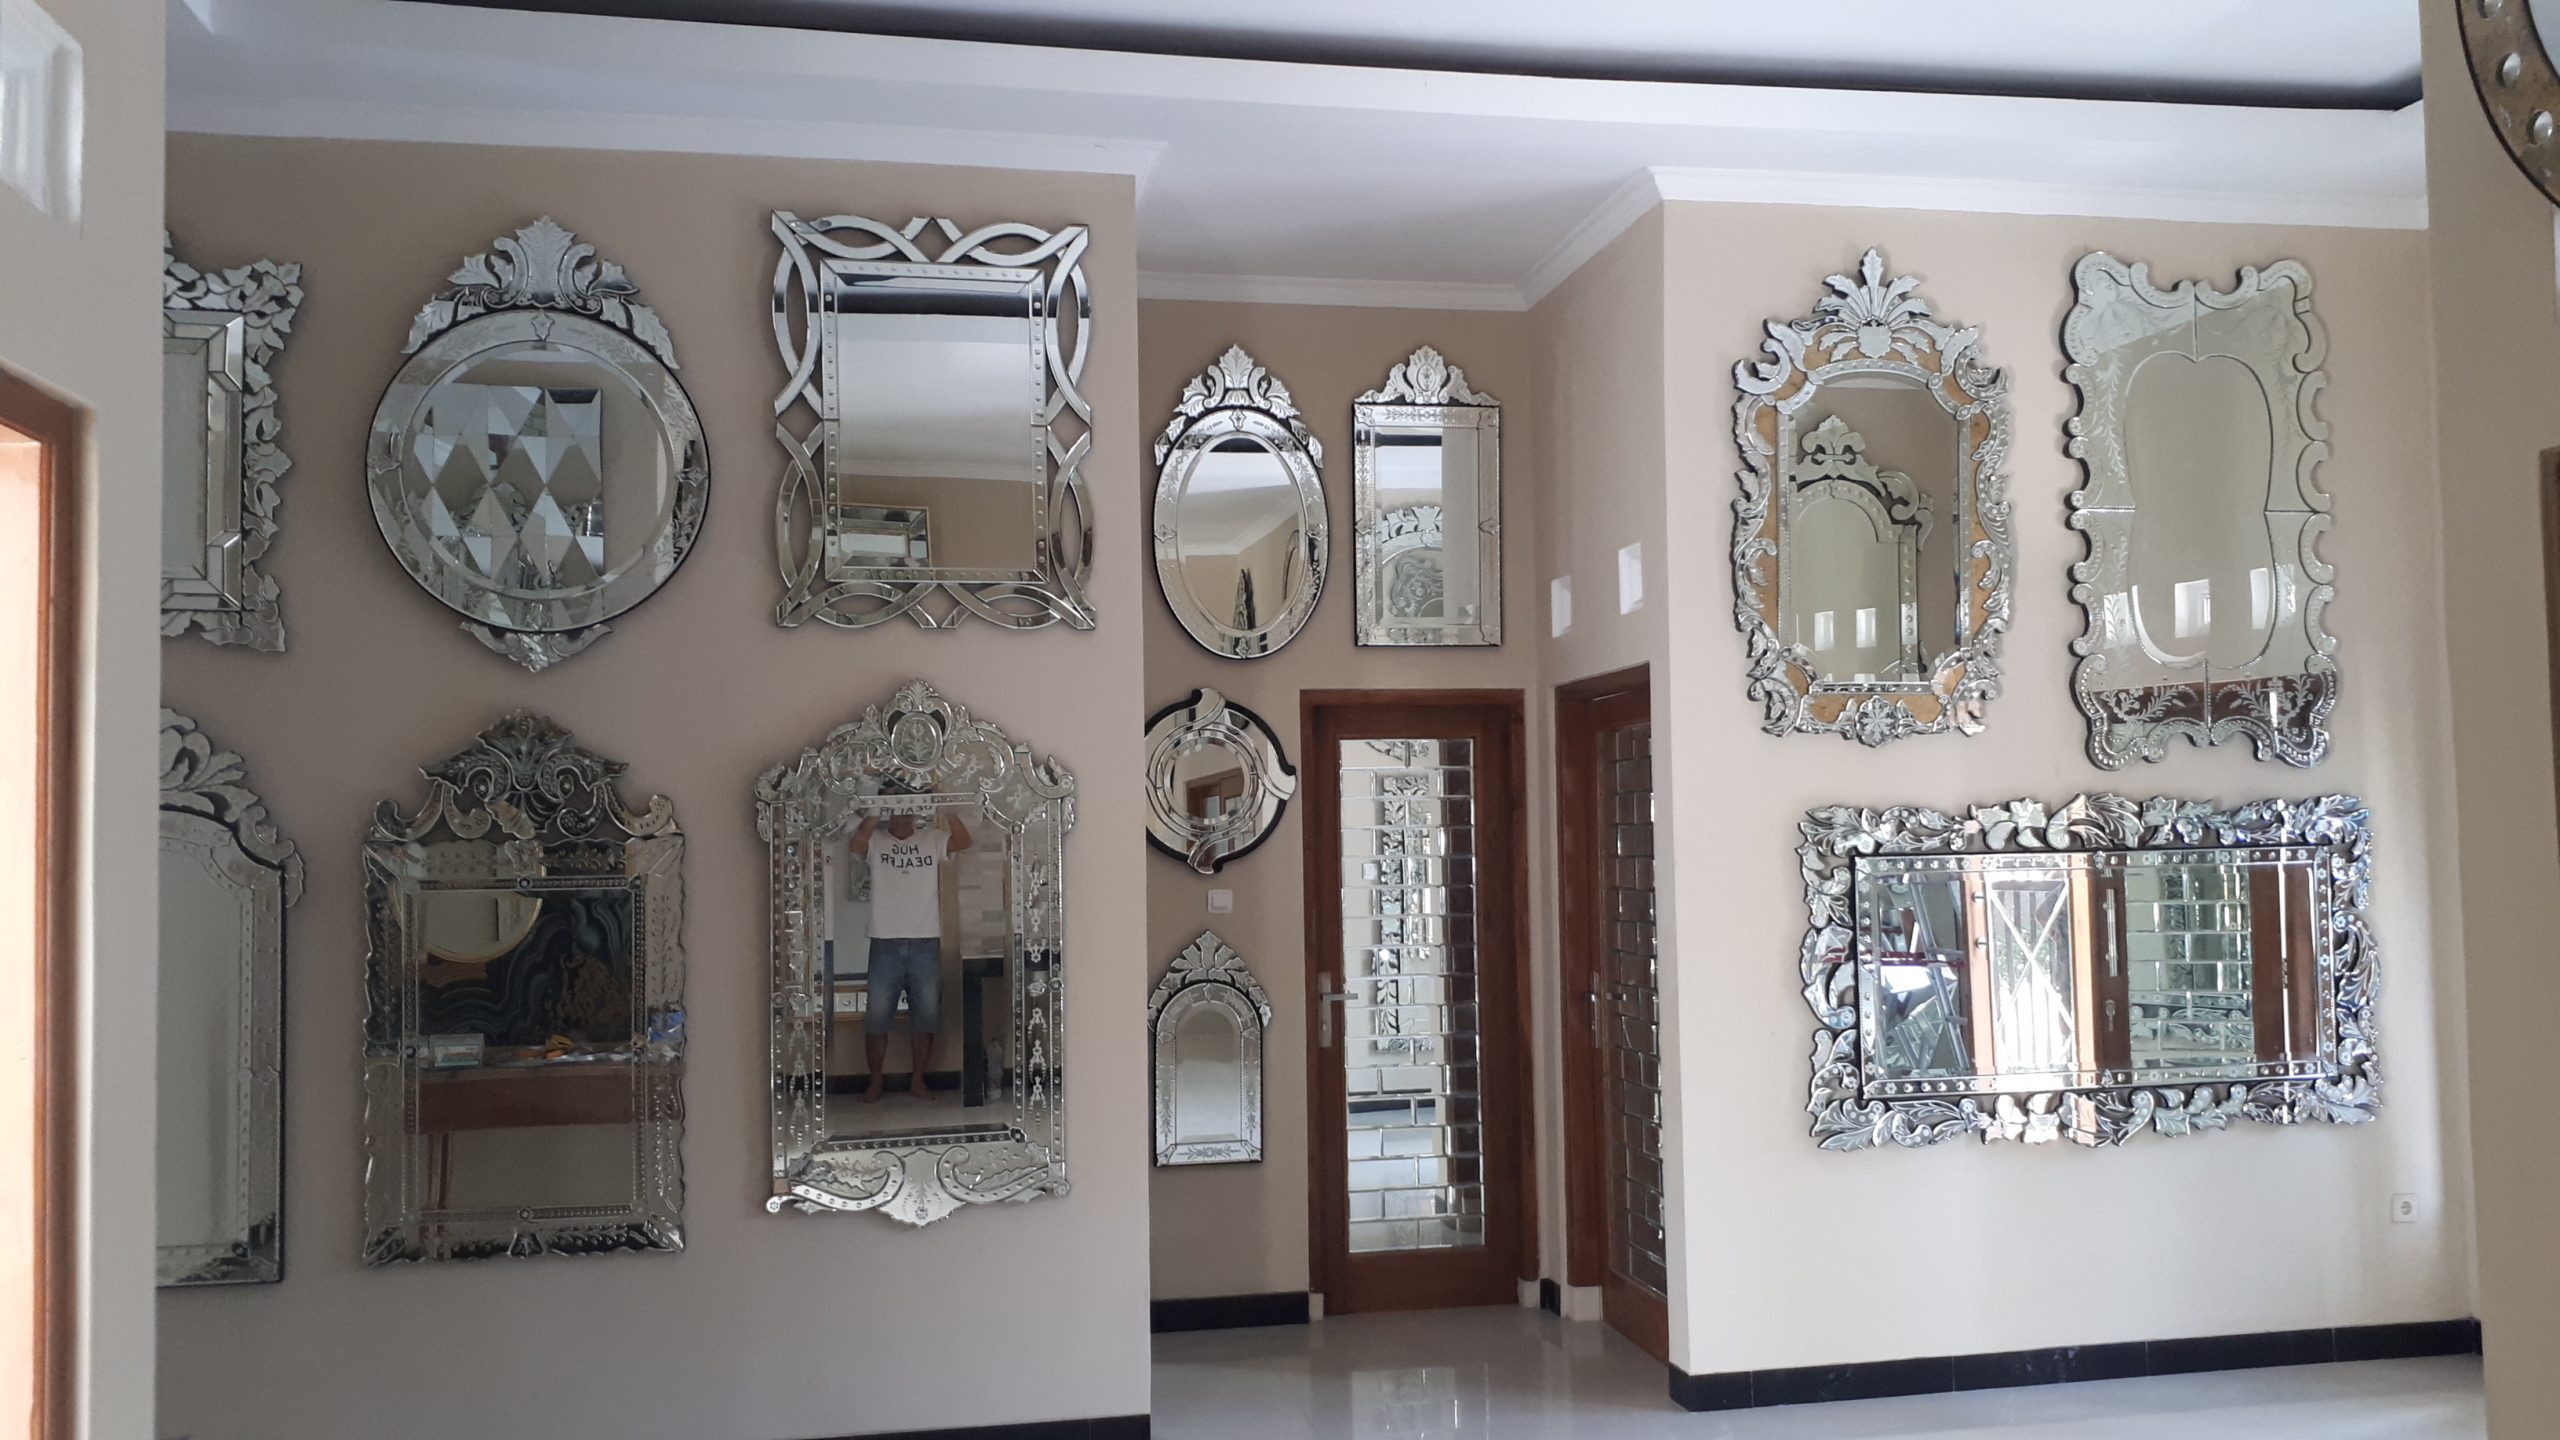 Venetian mirrors